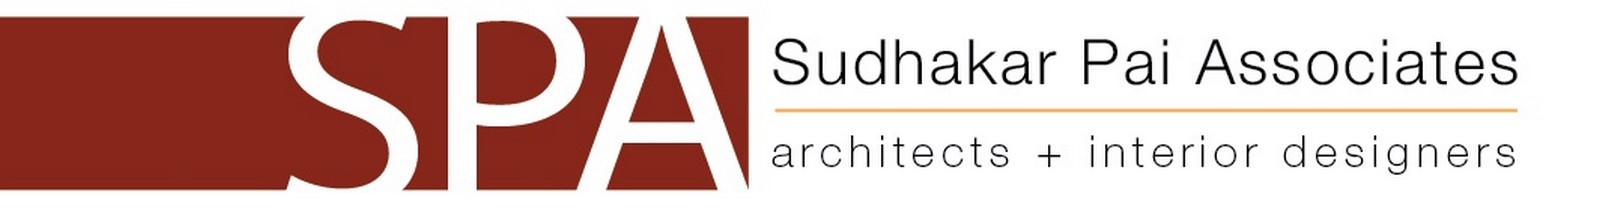 Sudhakar Pai Associates- 10 Iconic Projects  - Sheet1